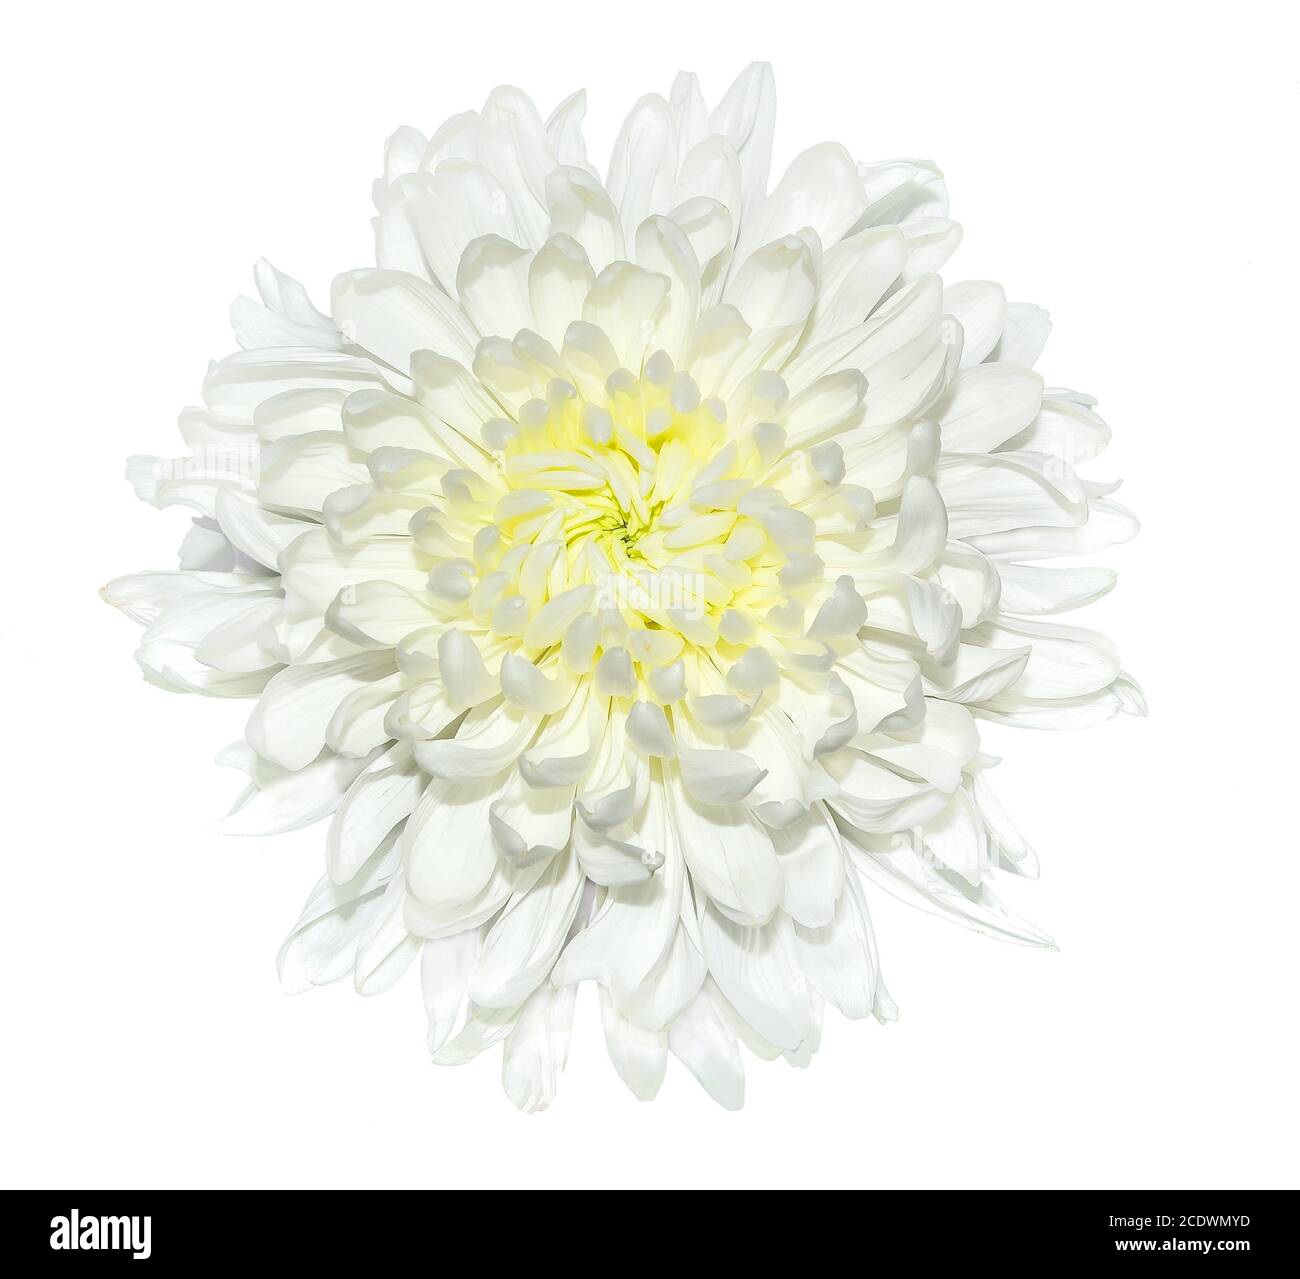 Single white chrysanthemum flower close up, isolated on a white background Stock Photo